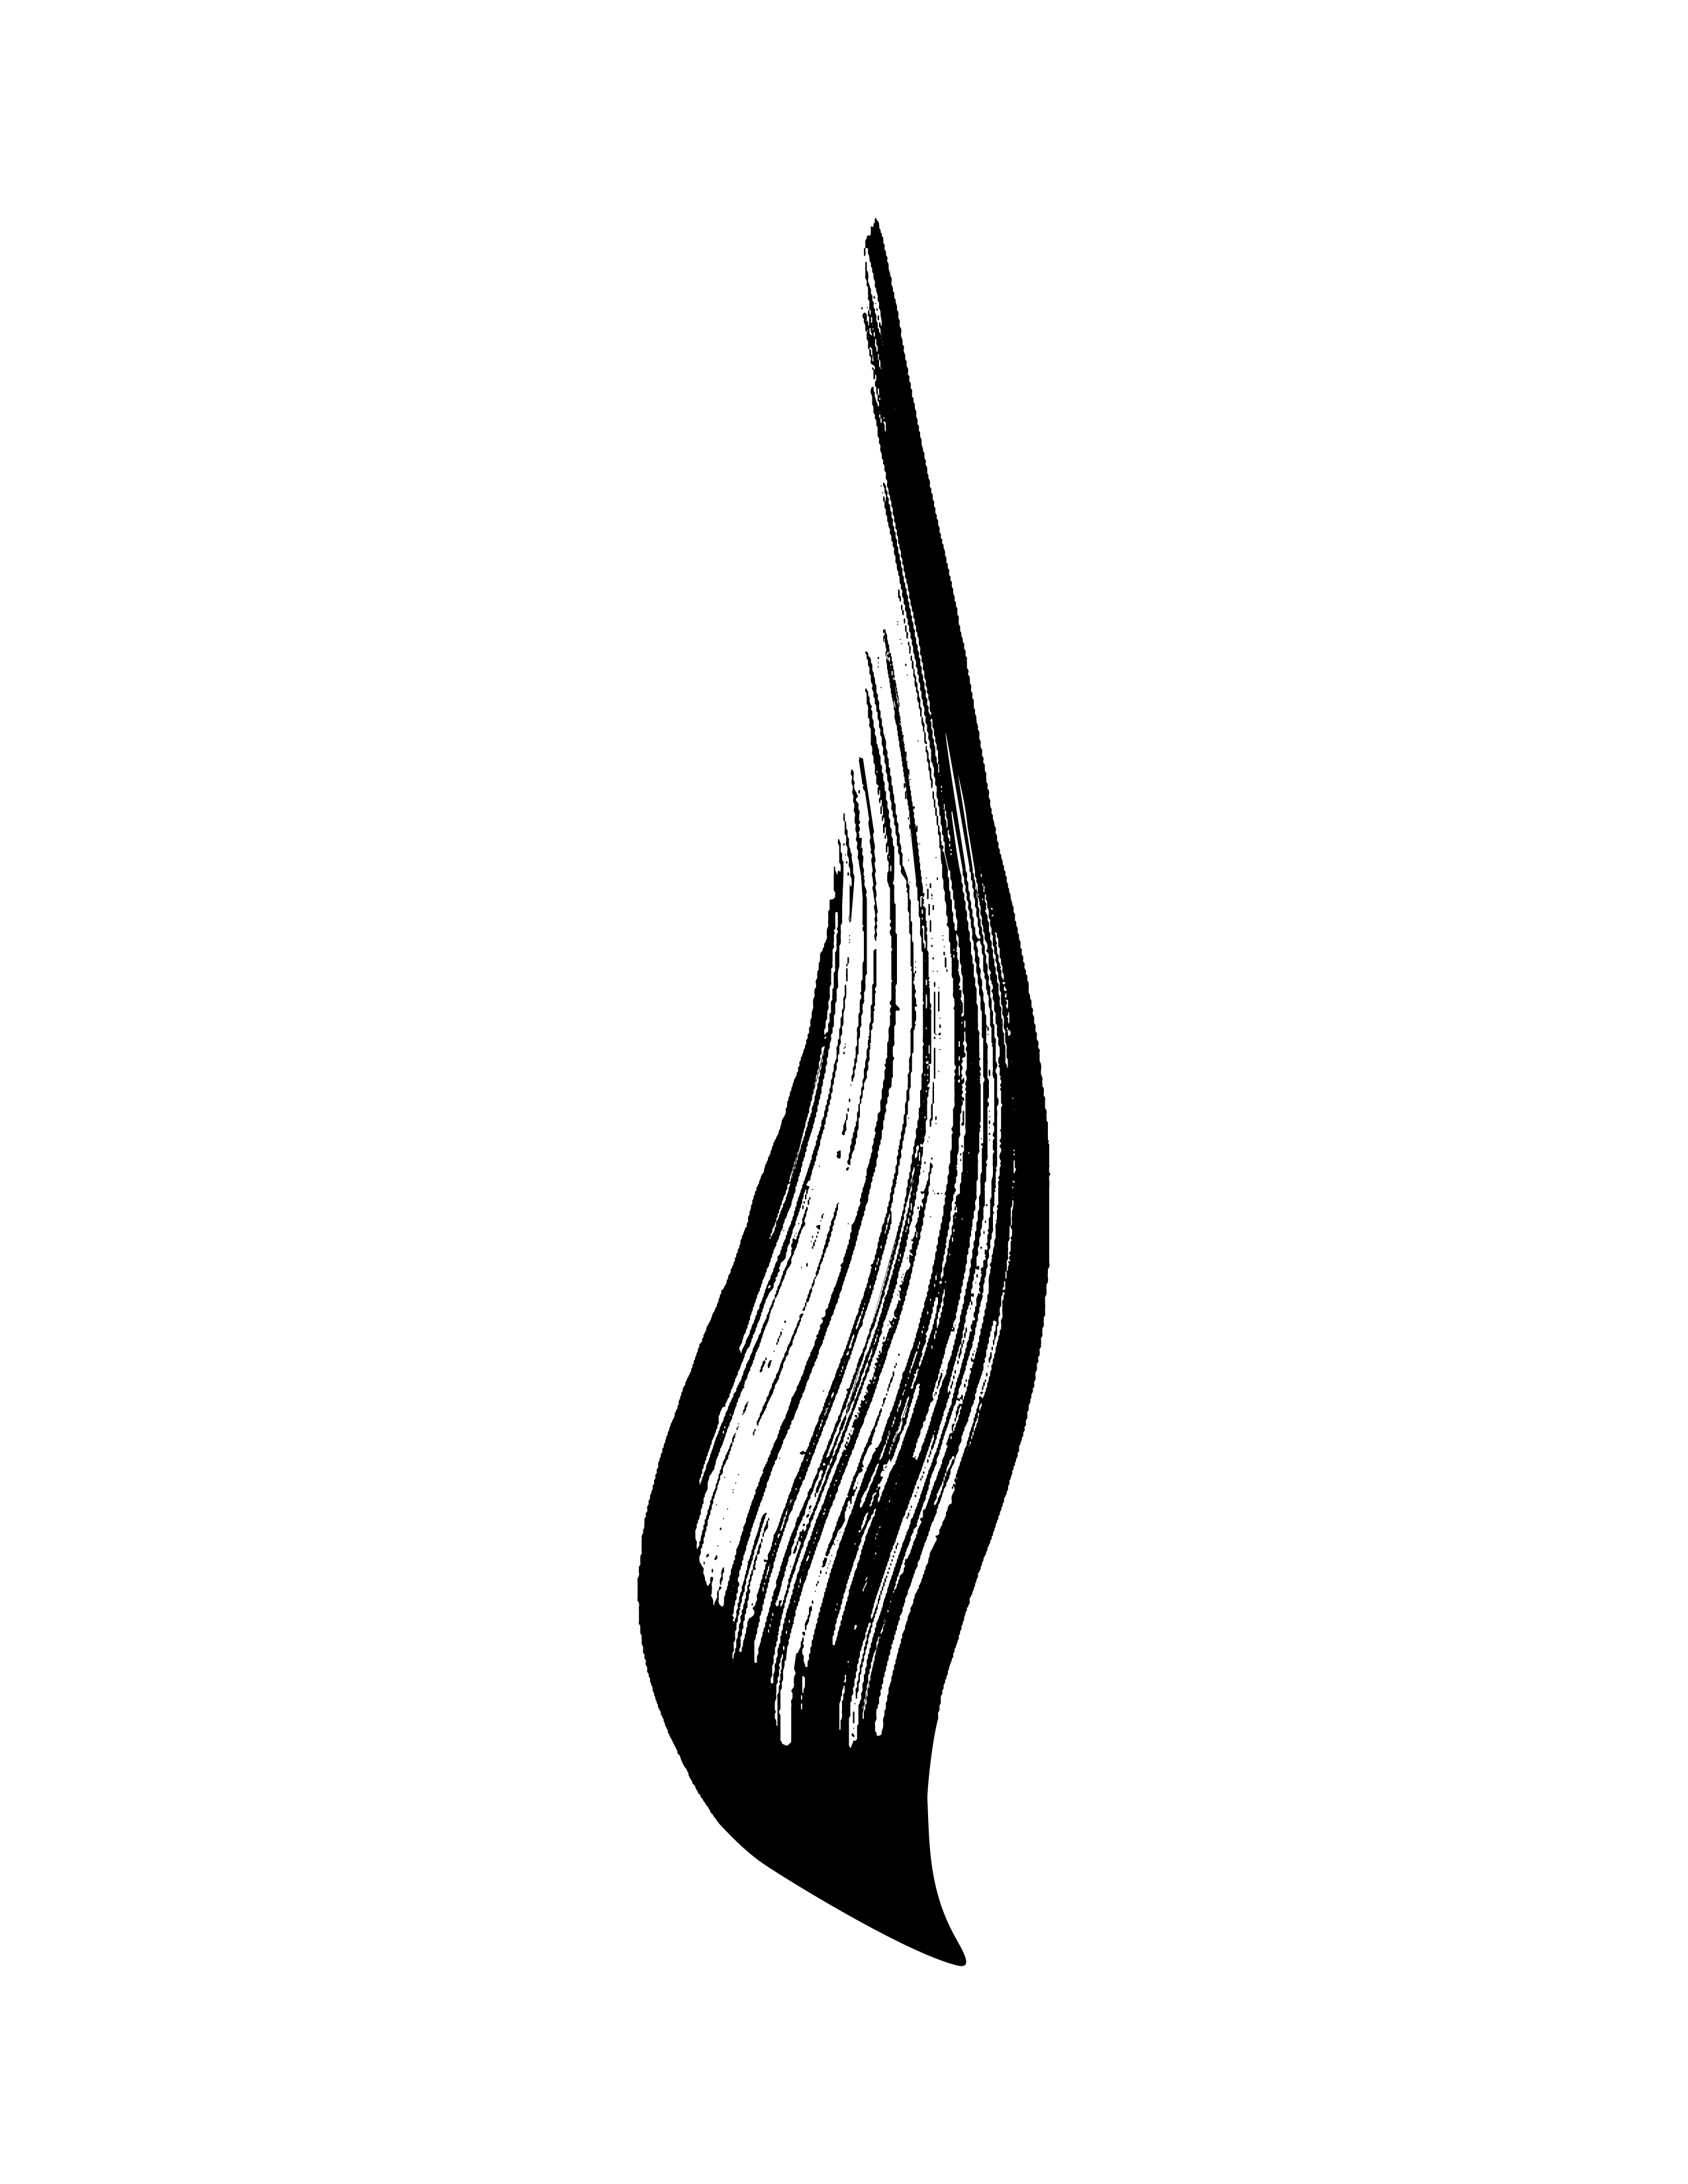 cowhorn emblem